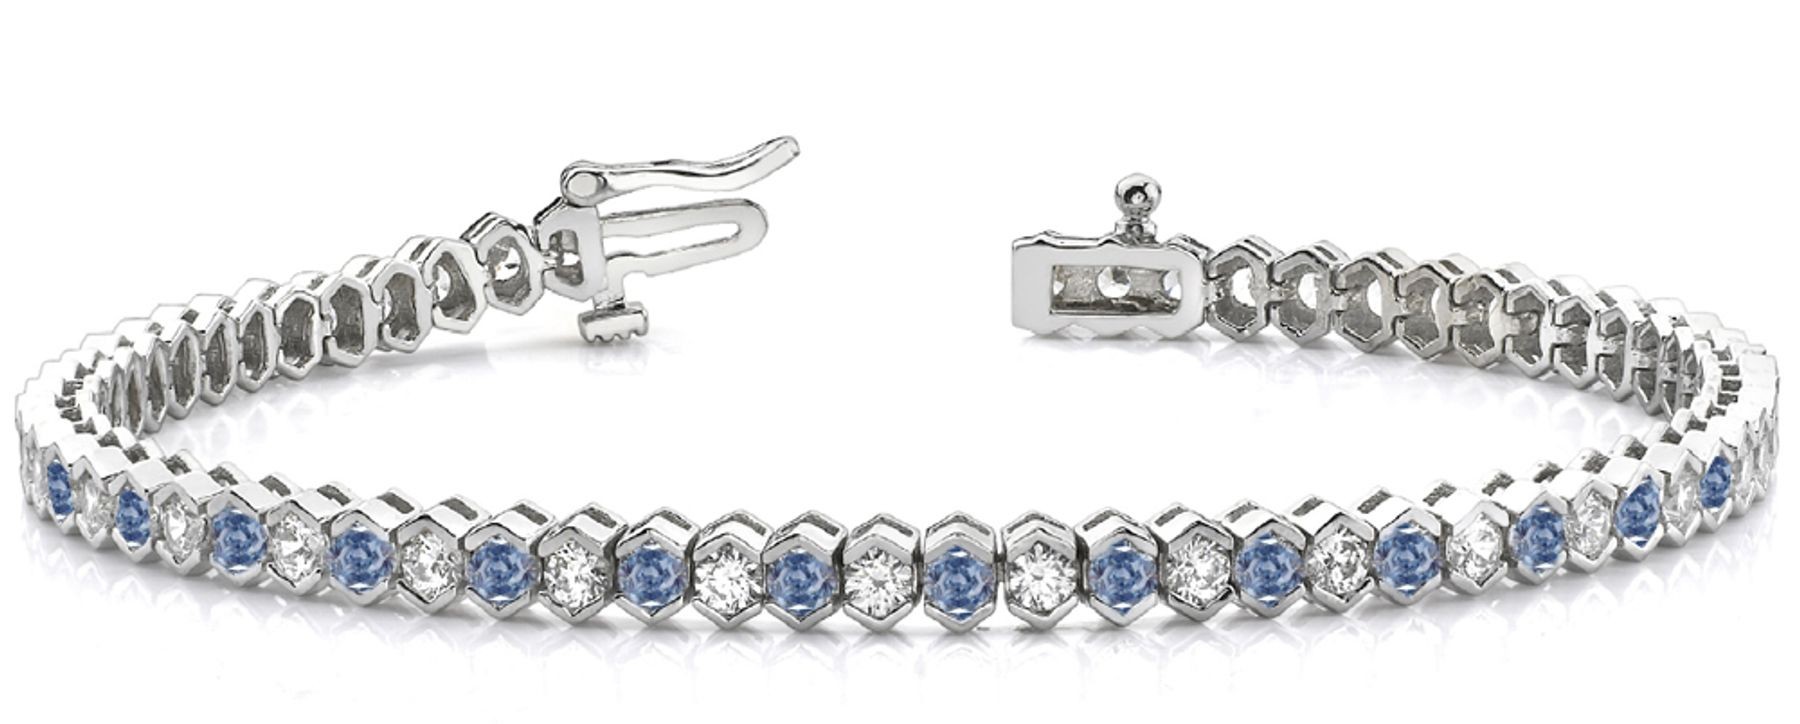 Colored Diamond Bracelets: Blue Diamonds - Blue Colored Diamond Bracelets